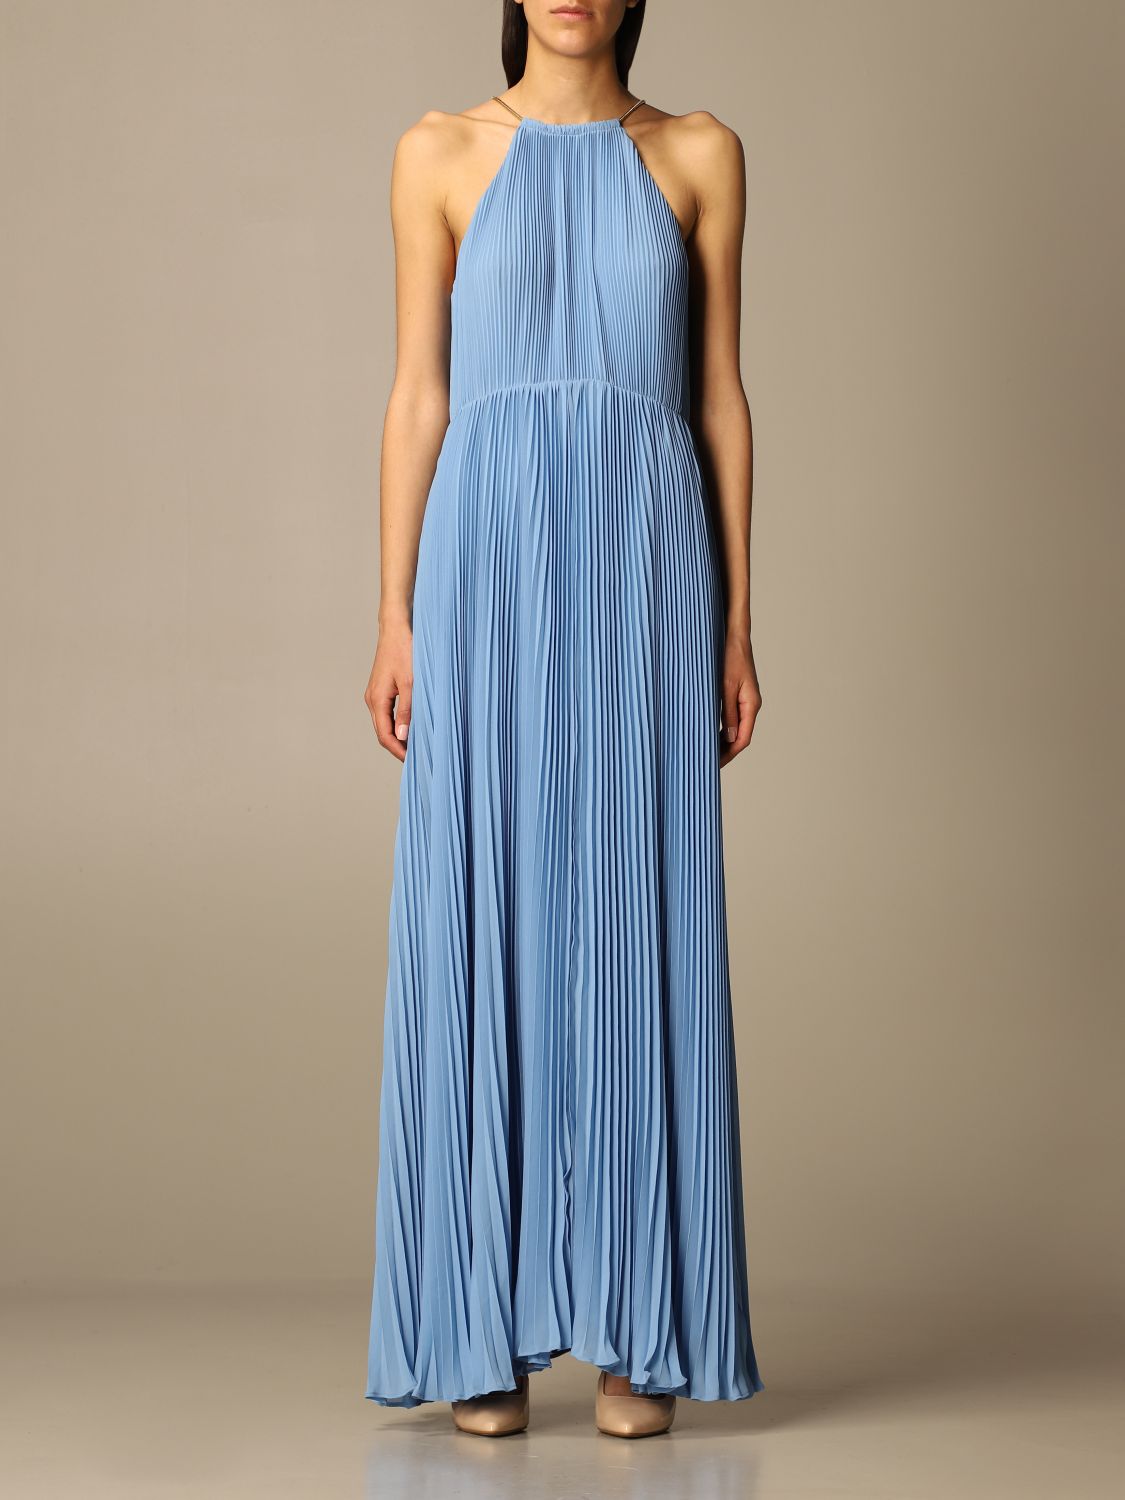 Michael Kors  blue floral dress Womens Fashion Dresses  Sets Dresses  on Carousell